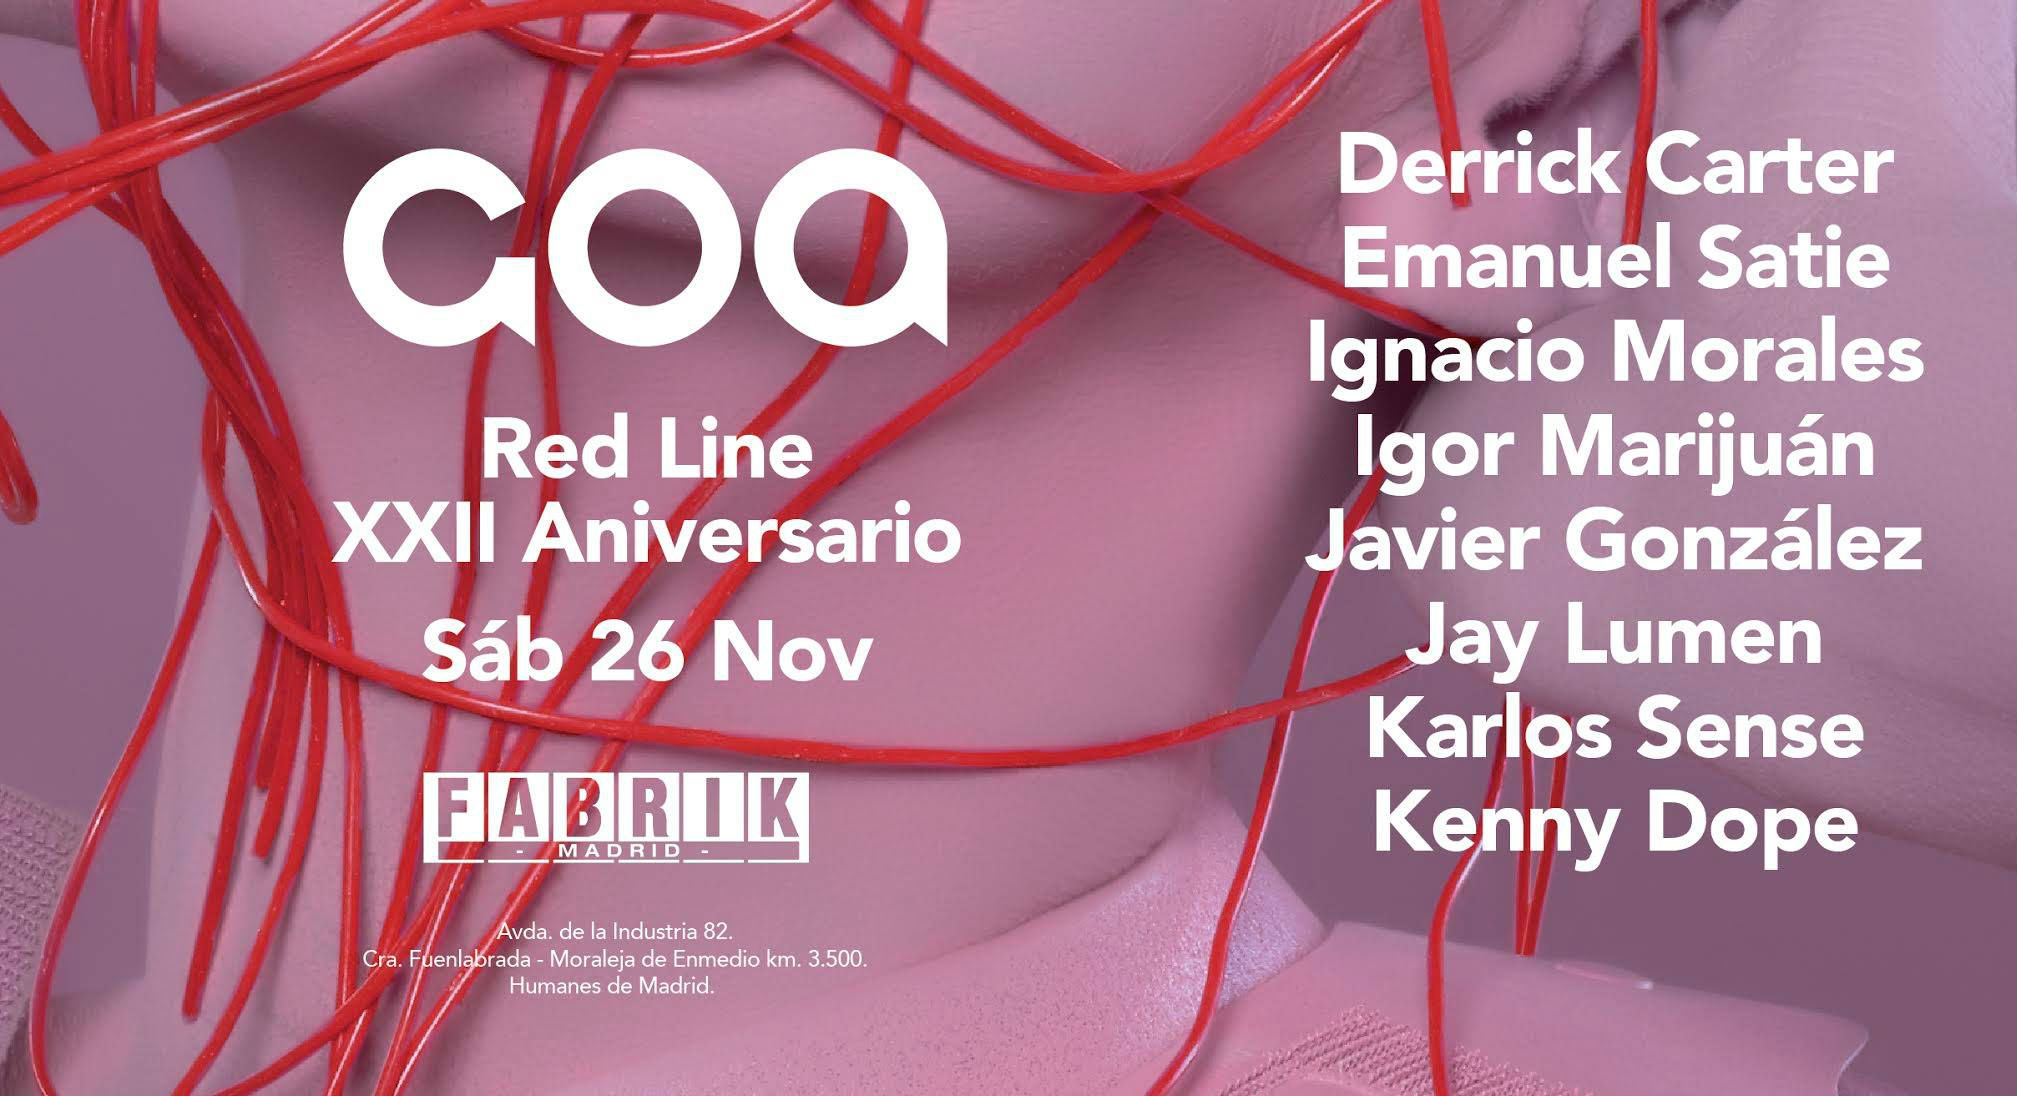 Marcos in Dub - Live @ GOA 22 Anniversary (Fabrik Madrid) - 26 November 2016